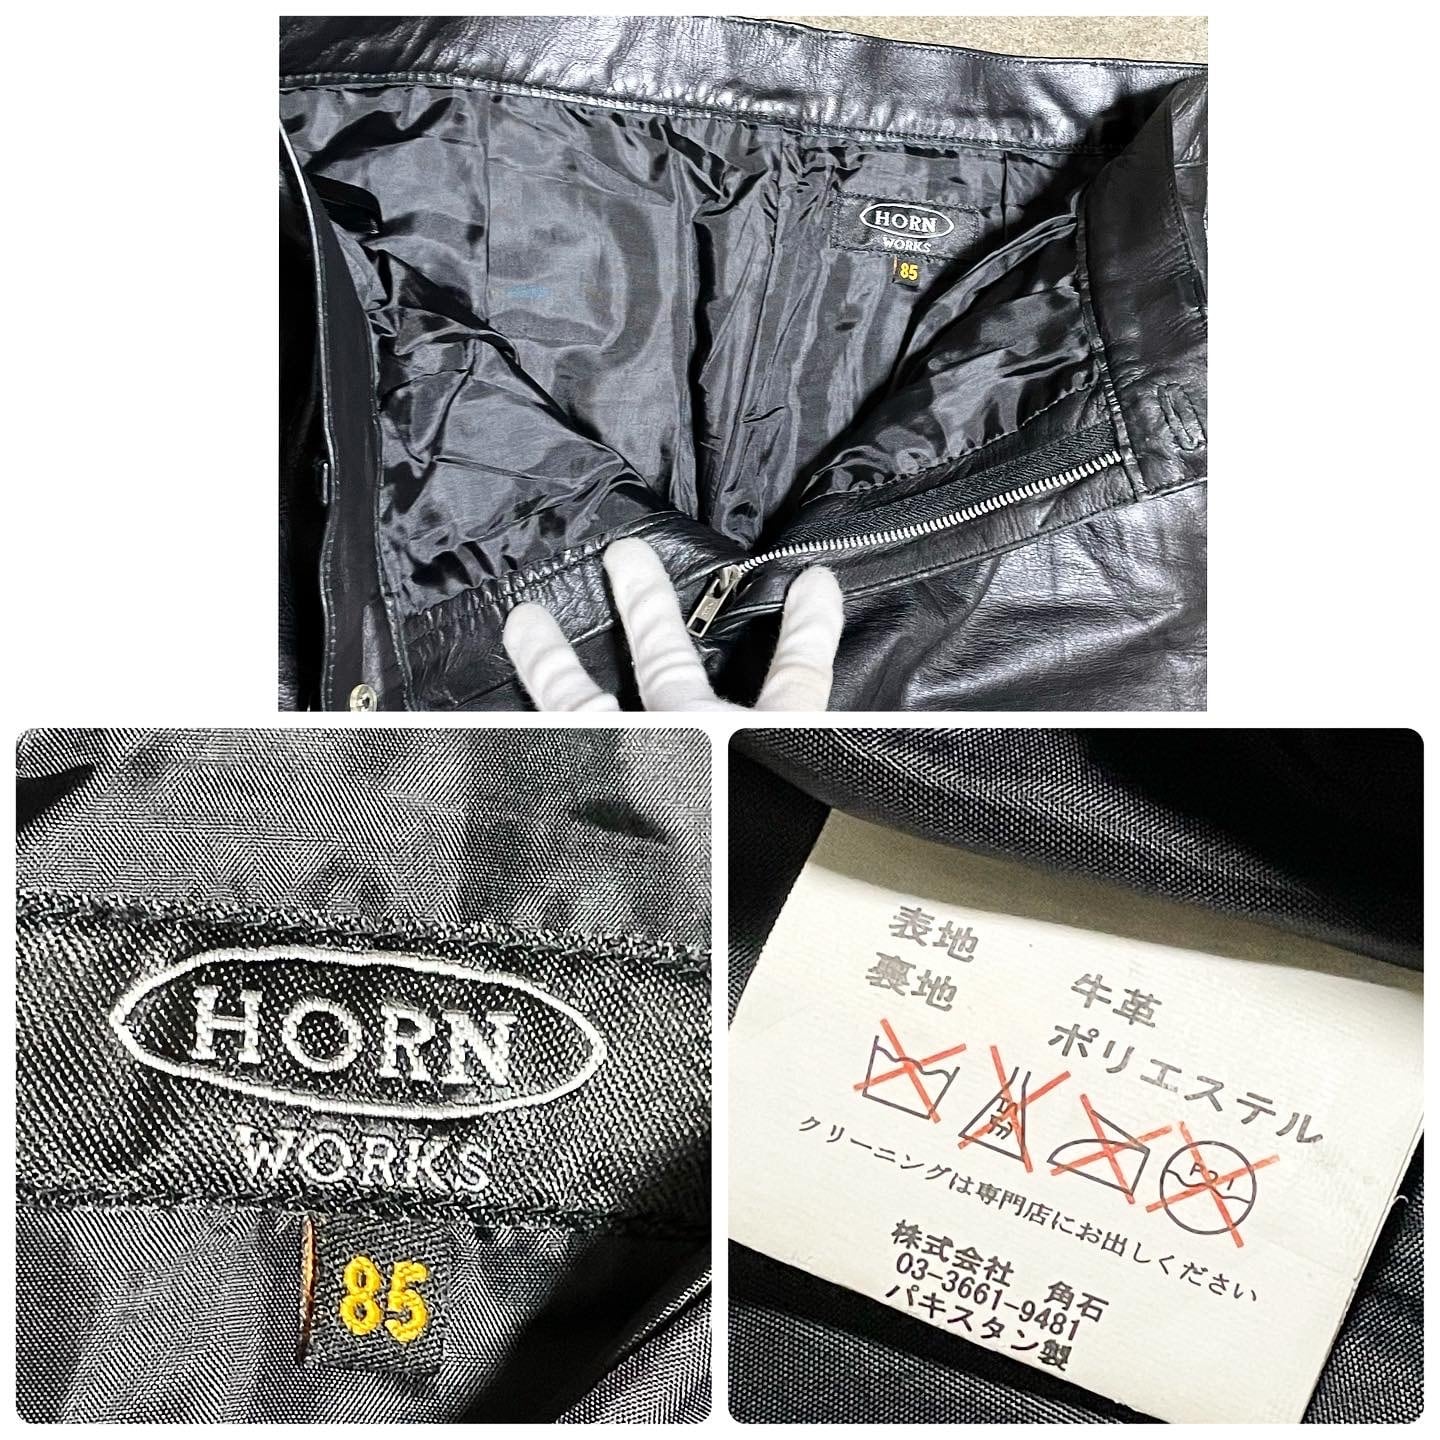 Horn Works 本皮パンツ